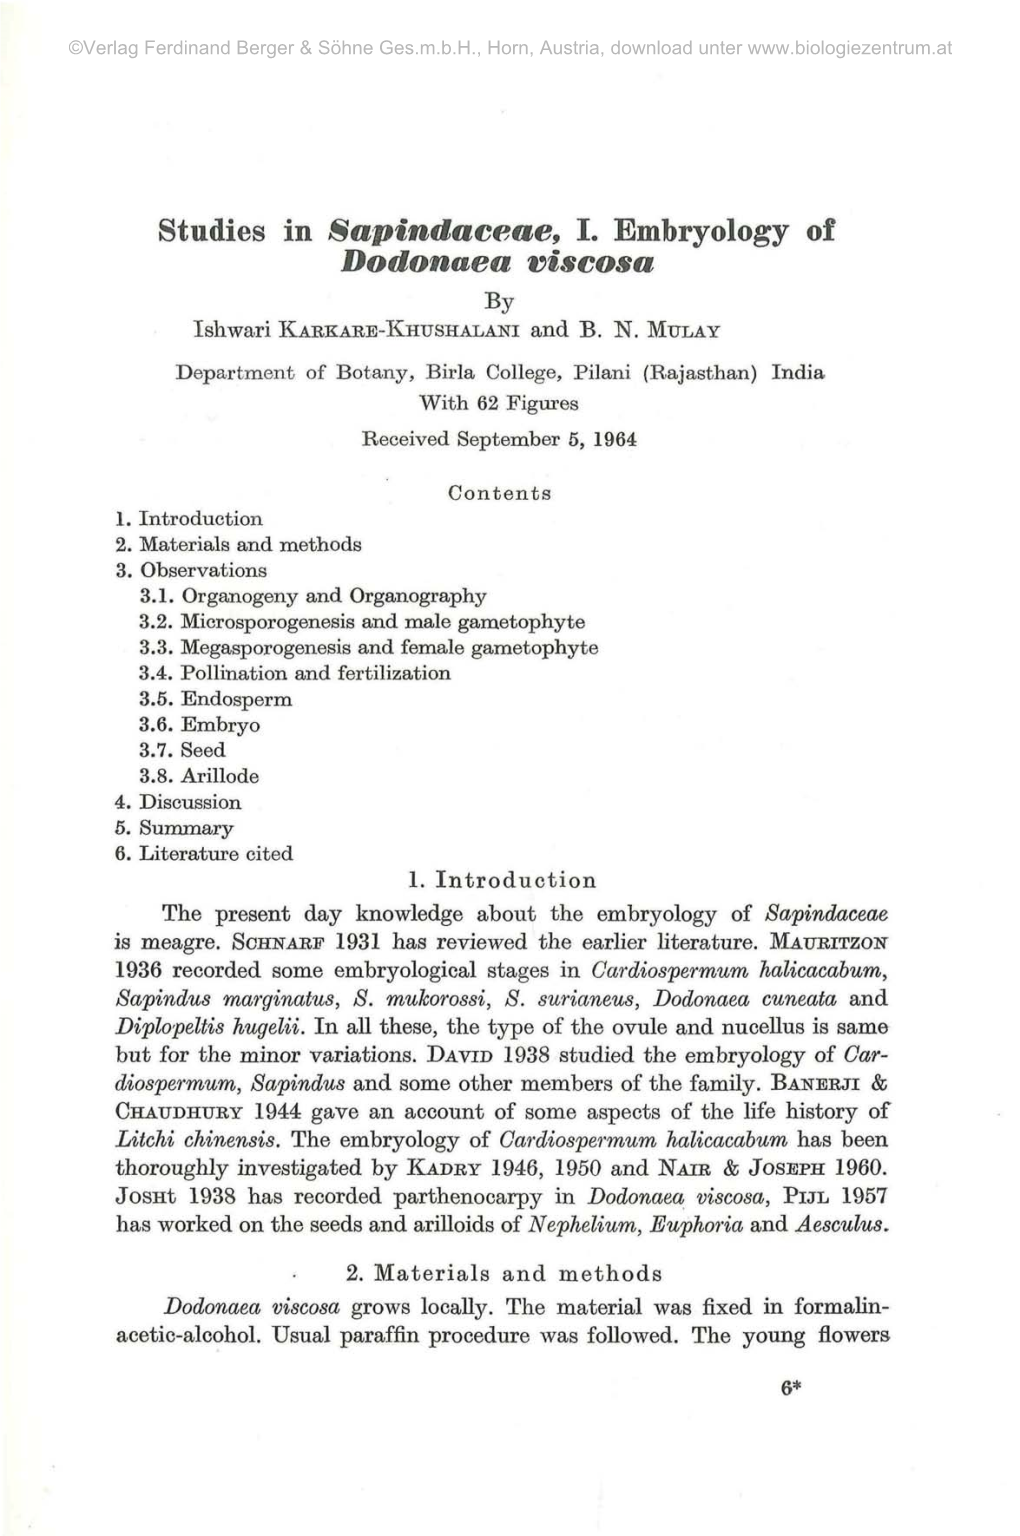 Studies in Sapindaceae, I. Embryology of Dodonaea Viscosa by Ishwari KARKARE-KHUSHALANI and B